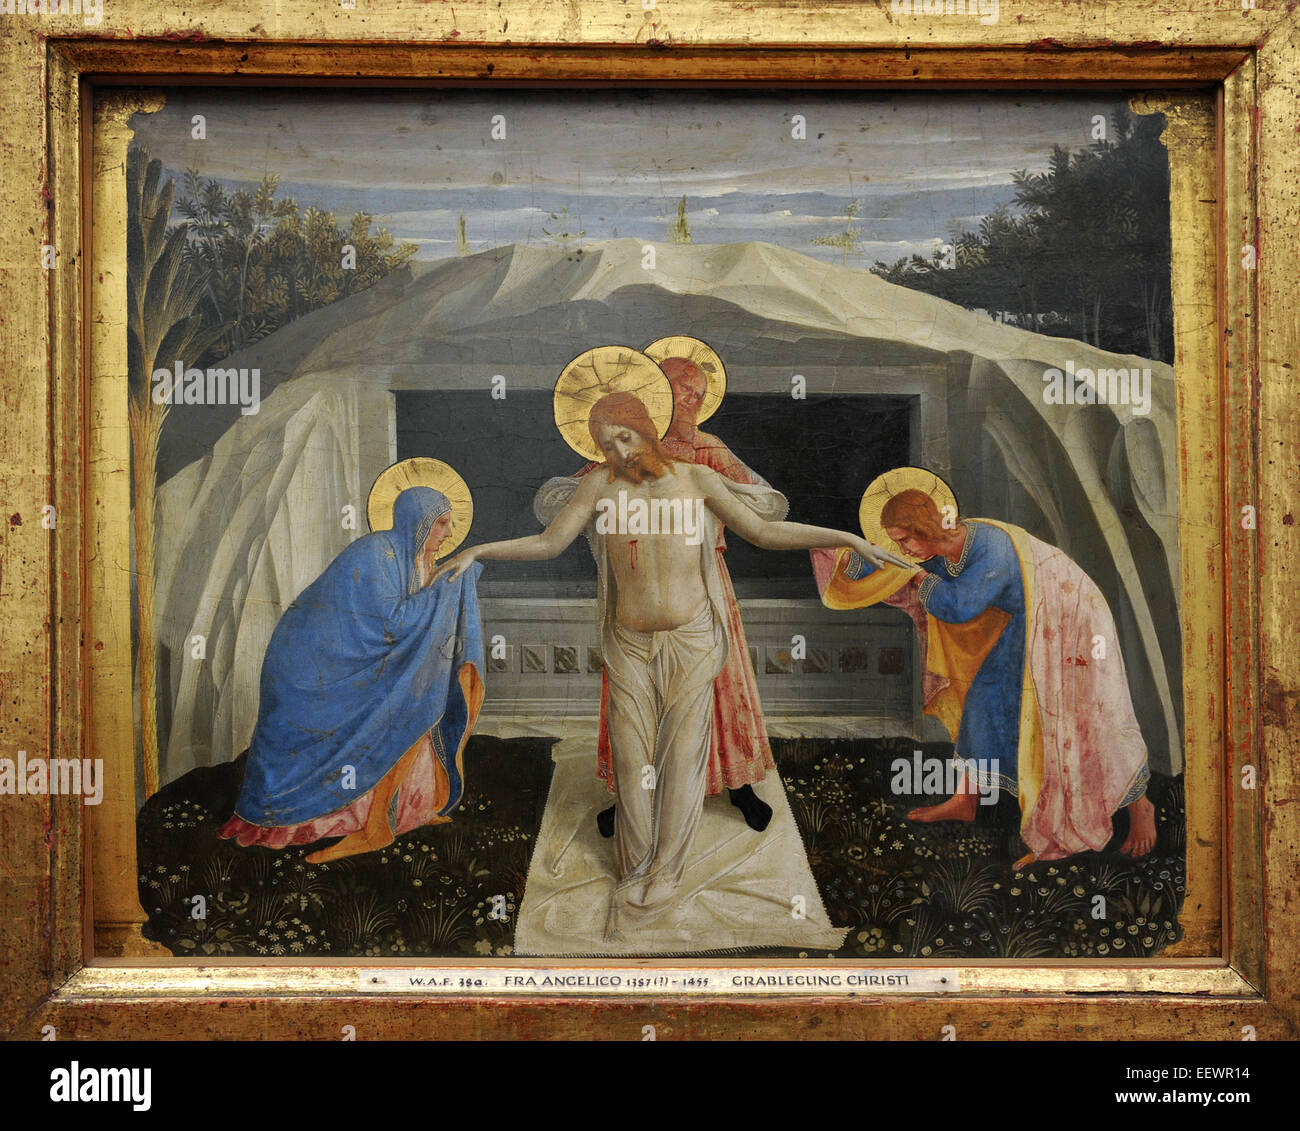 Fra Angelico (1395-1455). Italian Renaissance painter. Entombment of Christ. Abou 1438-1440. Alte Pinakothek. Munich. Germany. Stock Photo